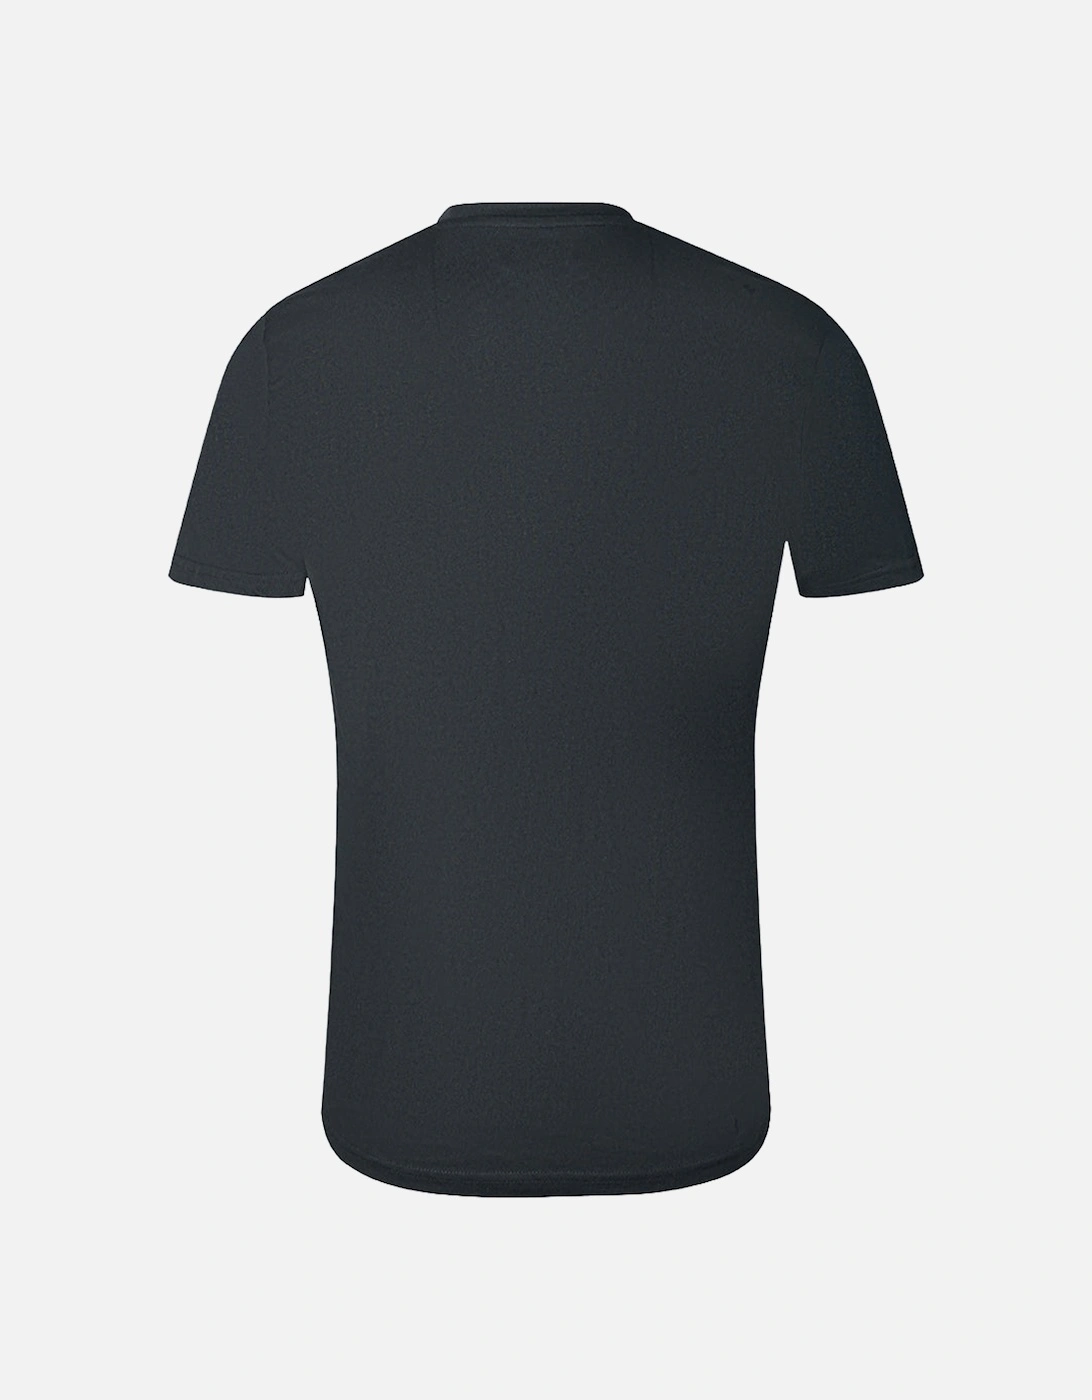 Cavalli Class Lightning Panther Design Black T-Shirt